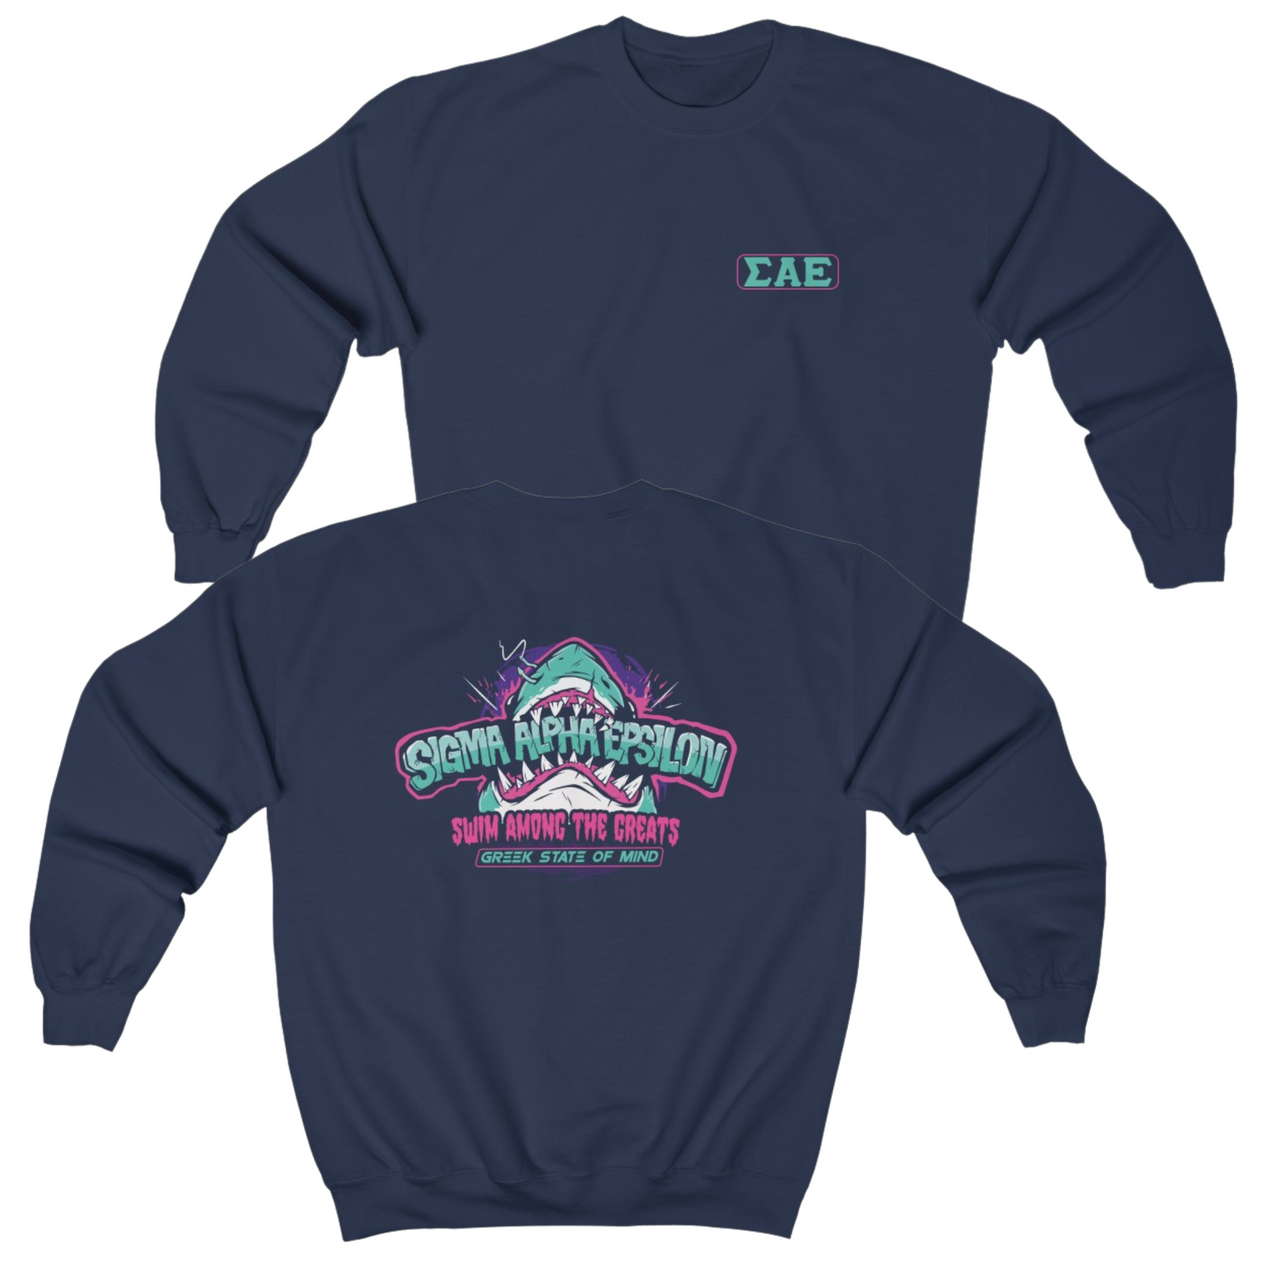 Navy Sigma Alpha Epsilon Graphic Crewneck Sweatshirt | The Deep End | Sigma Alpha Epsilon Clothing and Merchandise